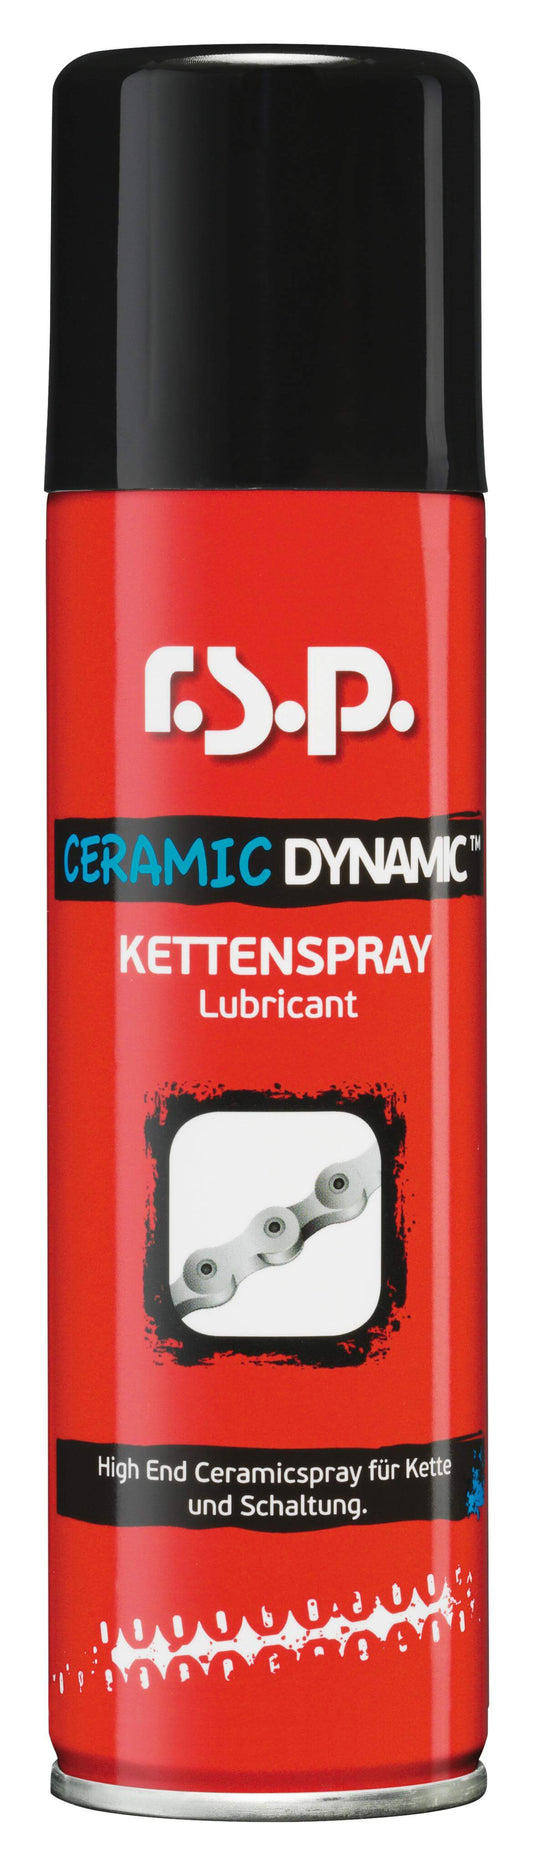 r.s.p. CERAMIC DYNAMIC 200ml (Kettenspray)